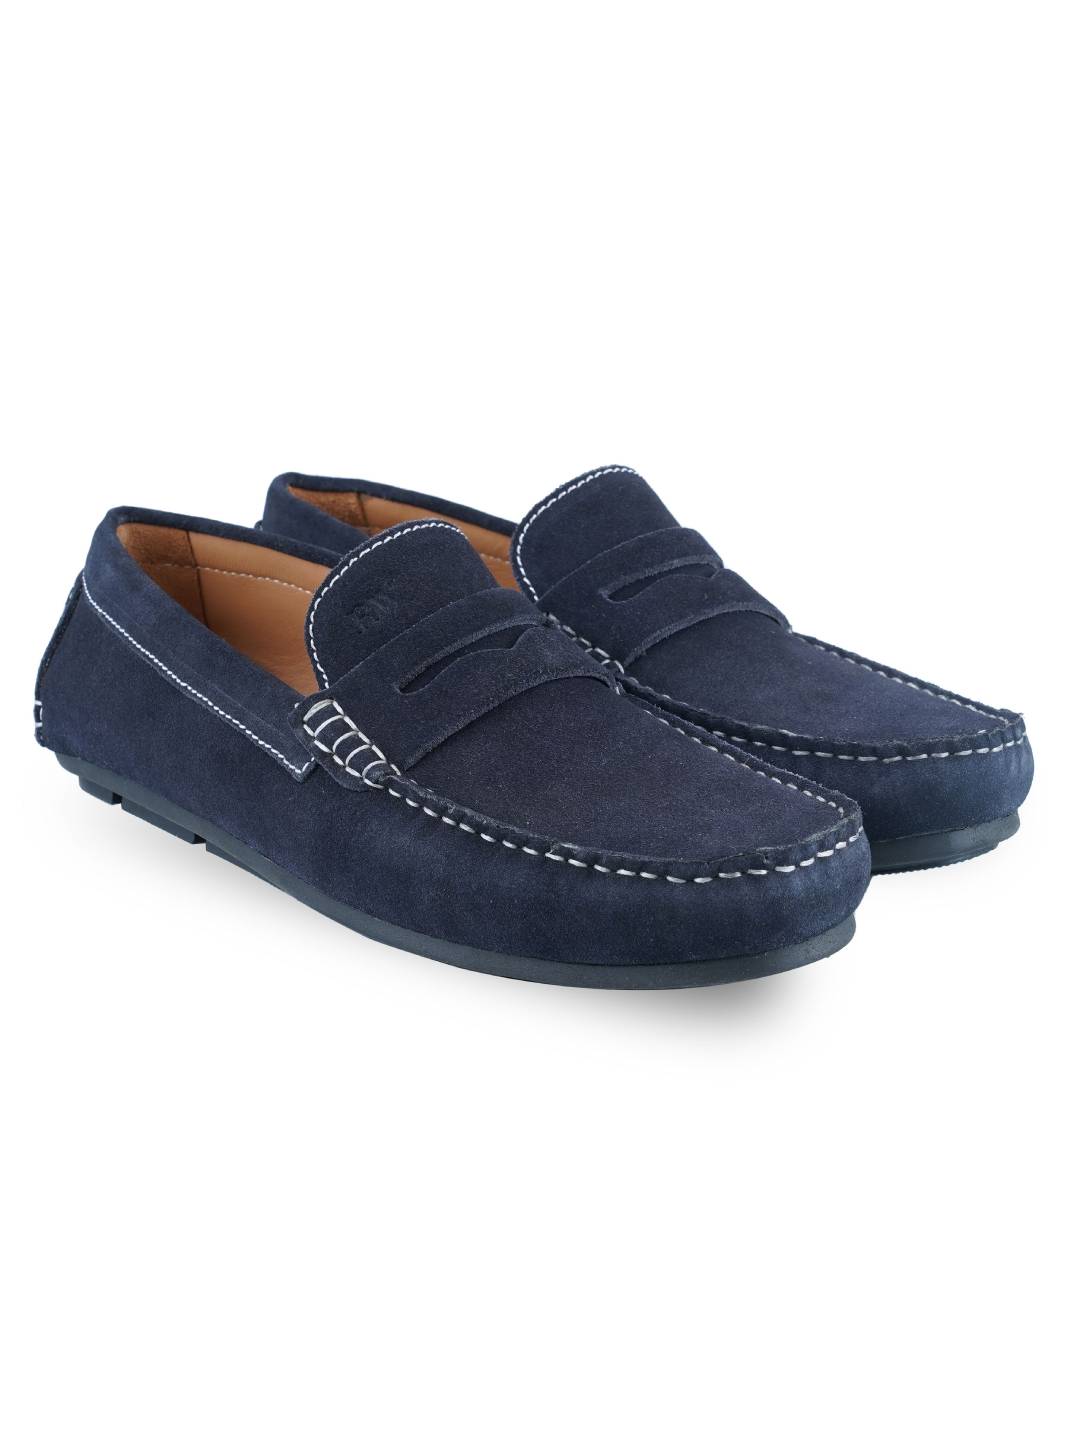 Navy Blue Penny Loafer Moccasins Leather Shoes leather shoes for men |  Rapawalk